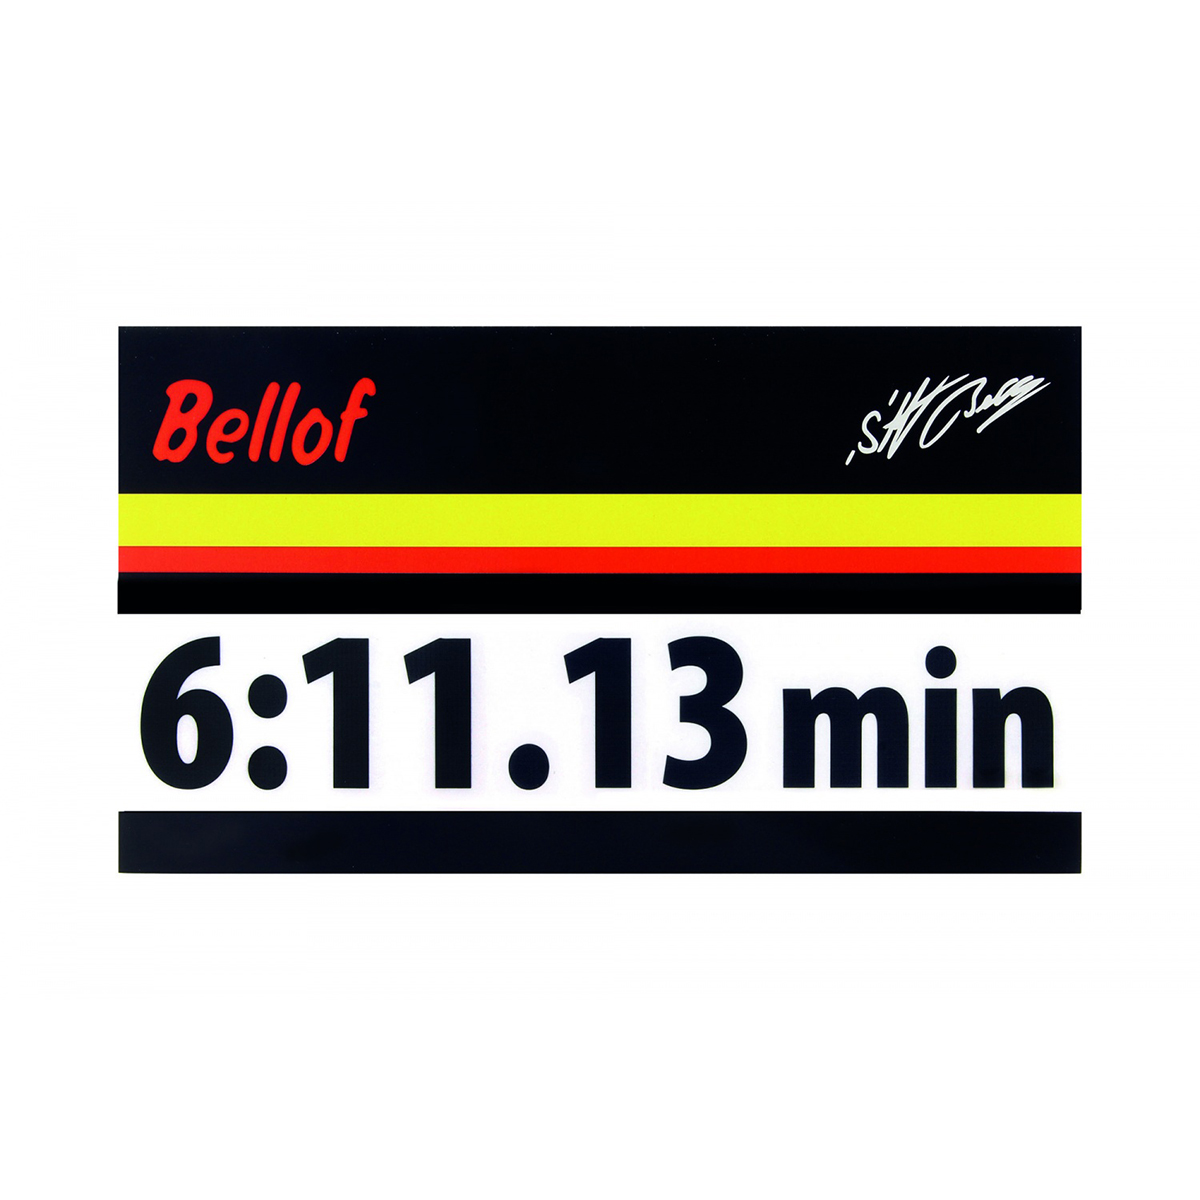 stefan-bellof-aufkleber-rekordrunde-6-1113-min-schwarz-120-x-25-mm